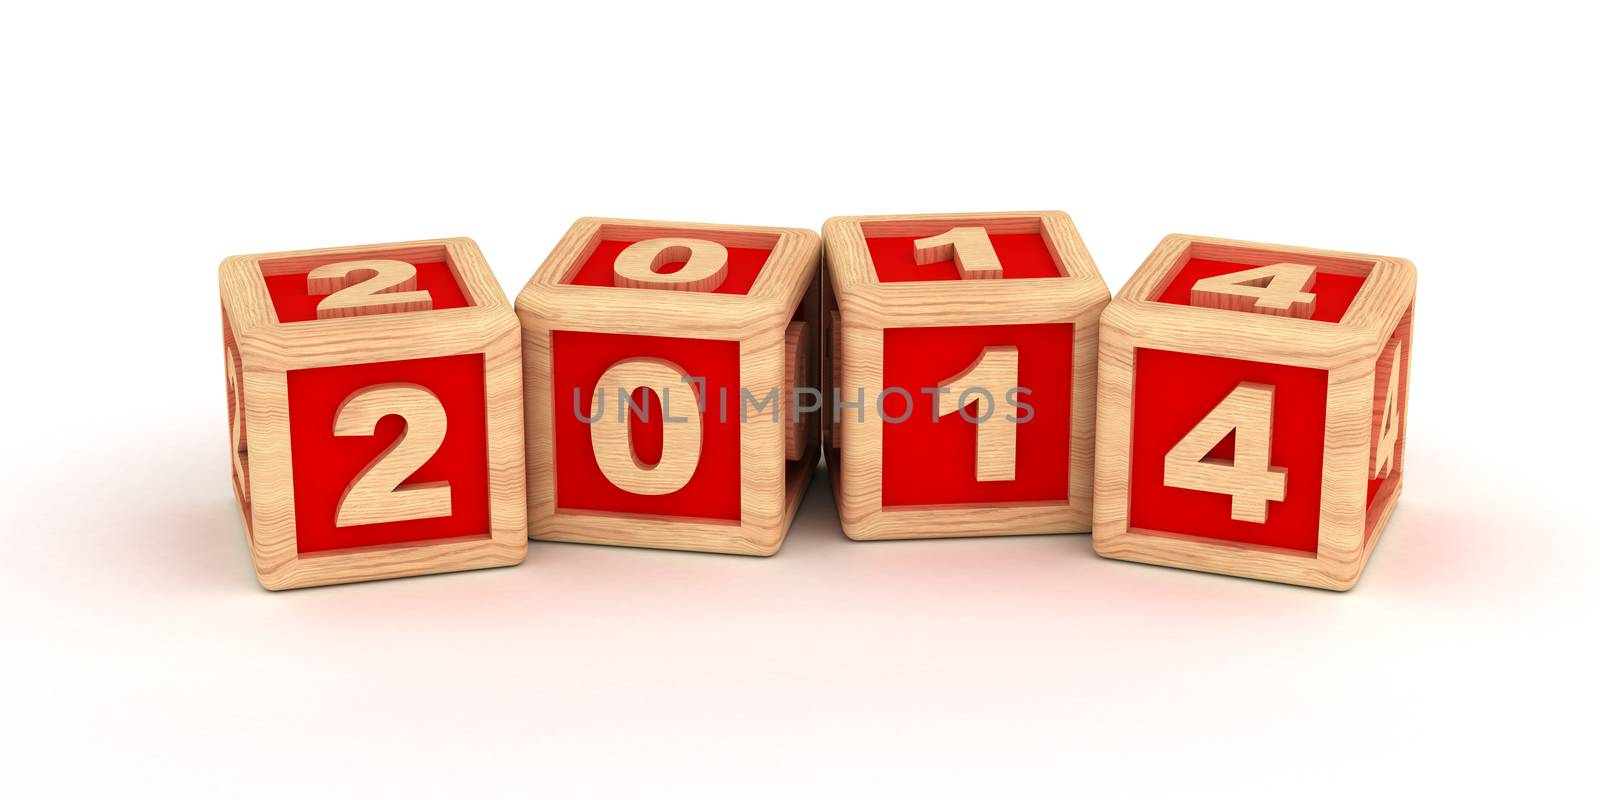 2014 New Years by selensergen